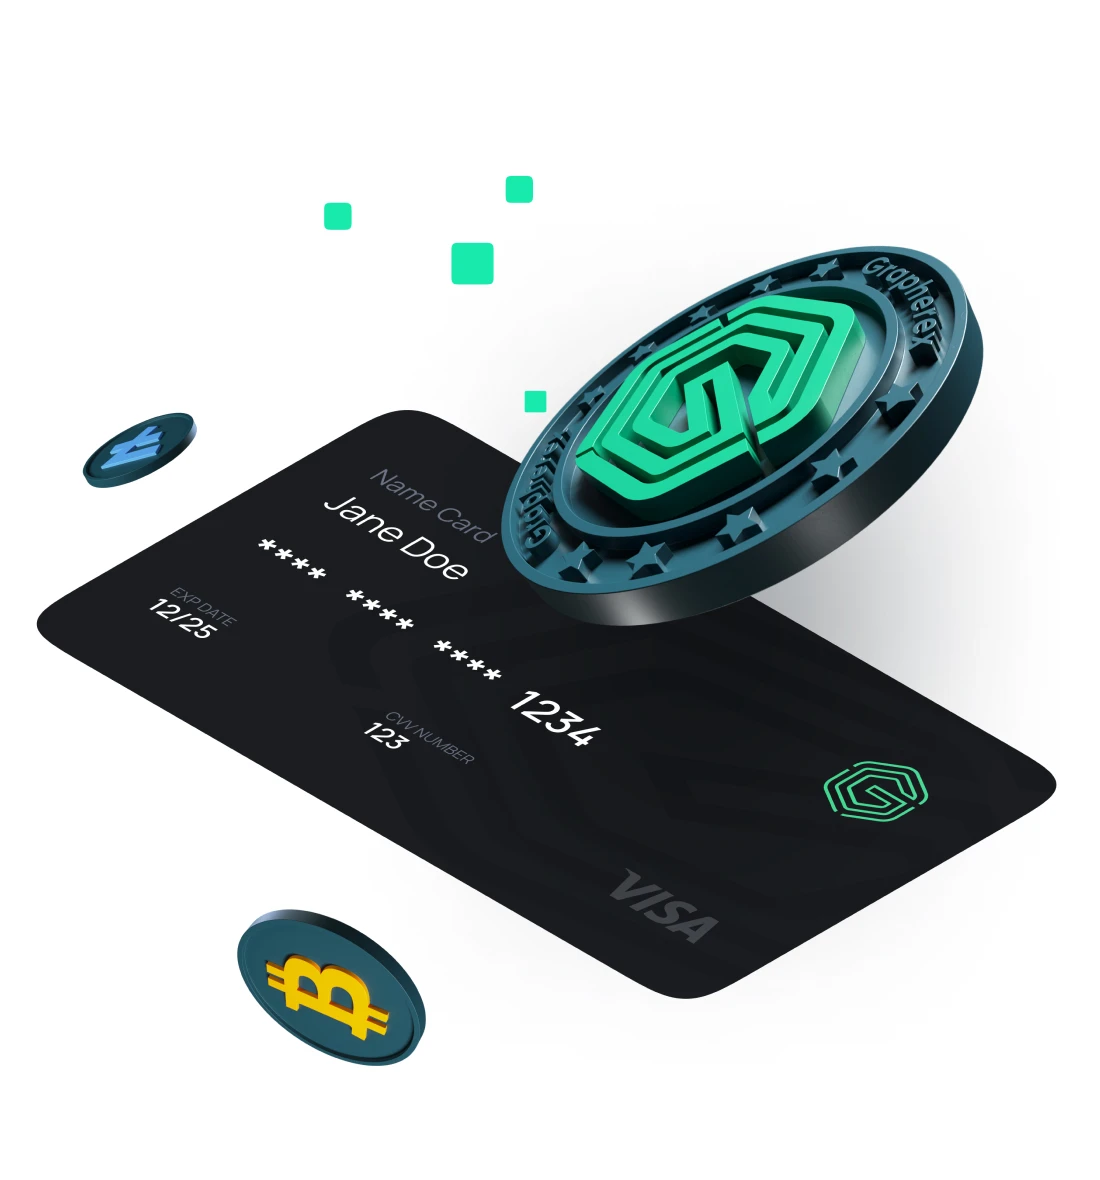 Virtual Crypto Card | Busha